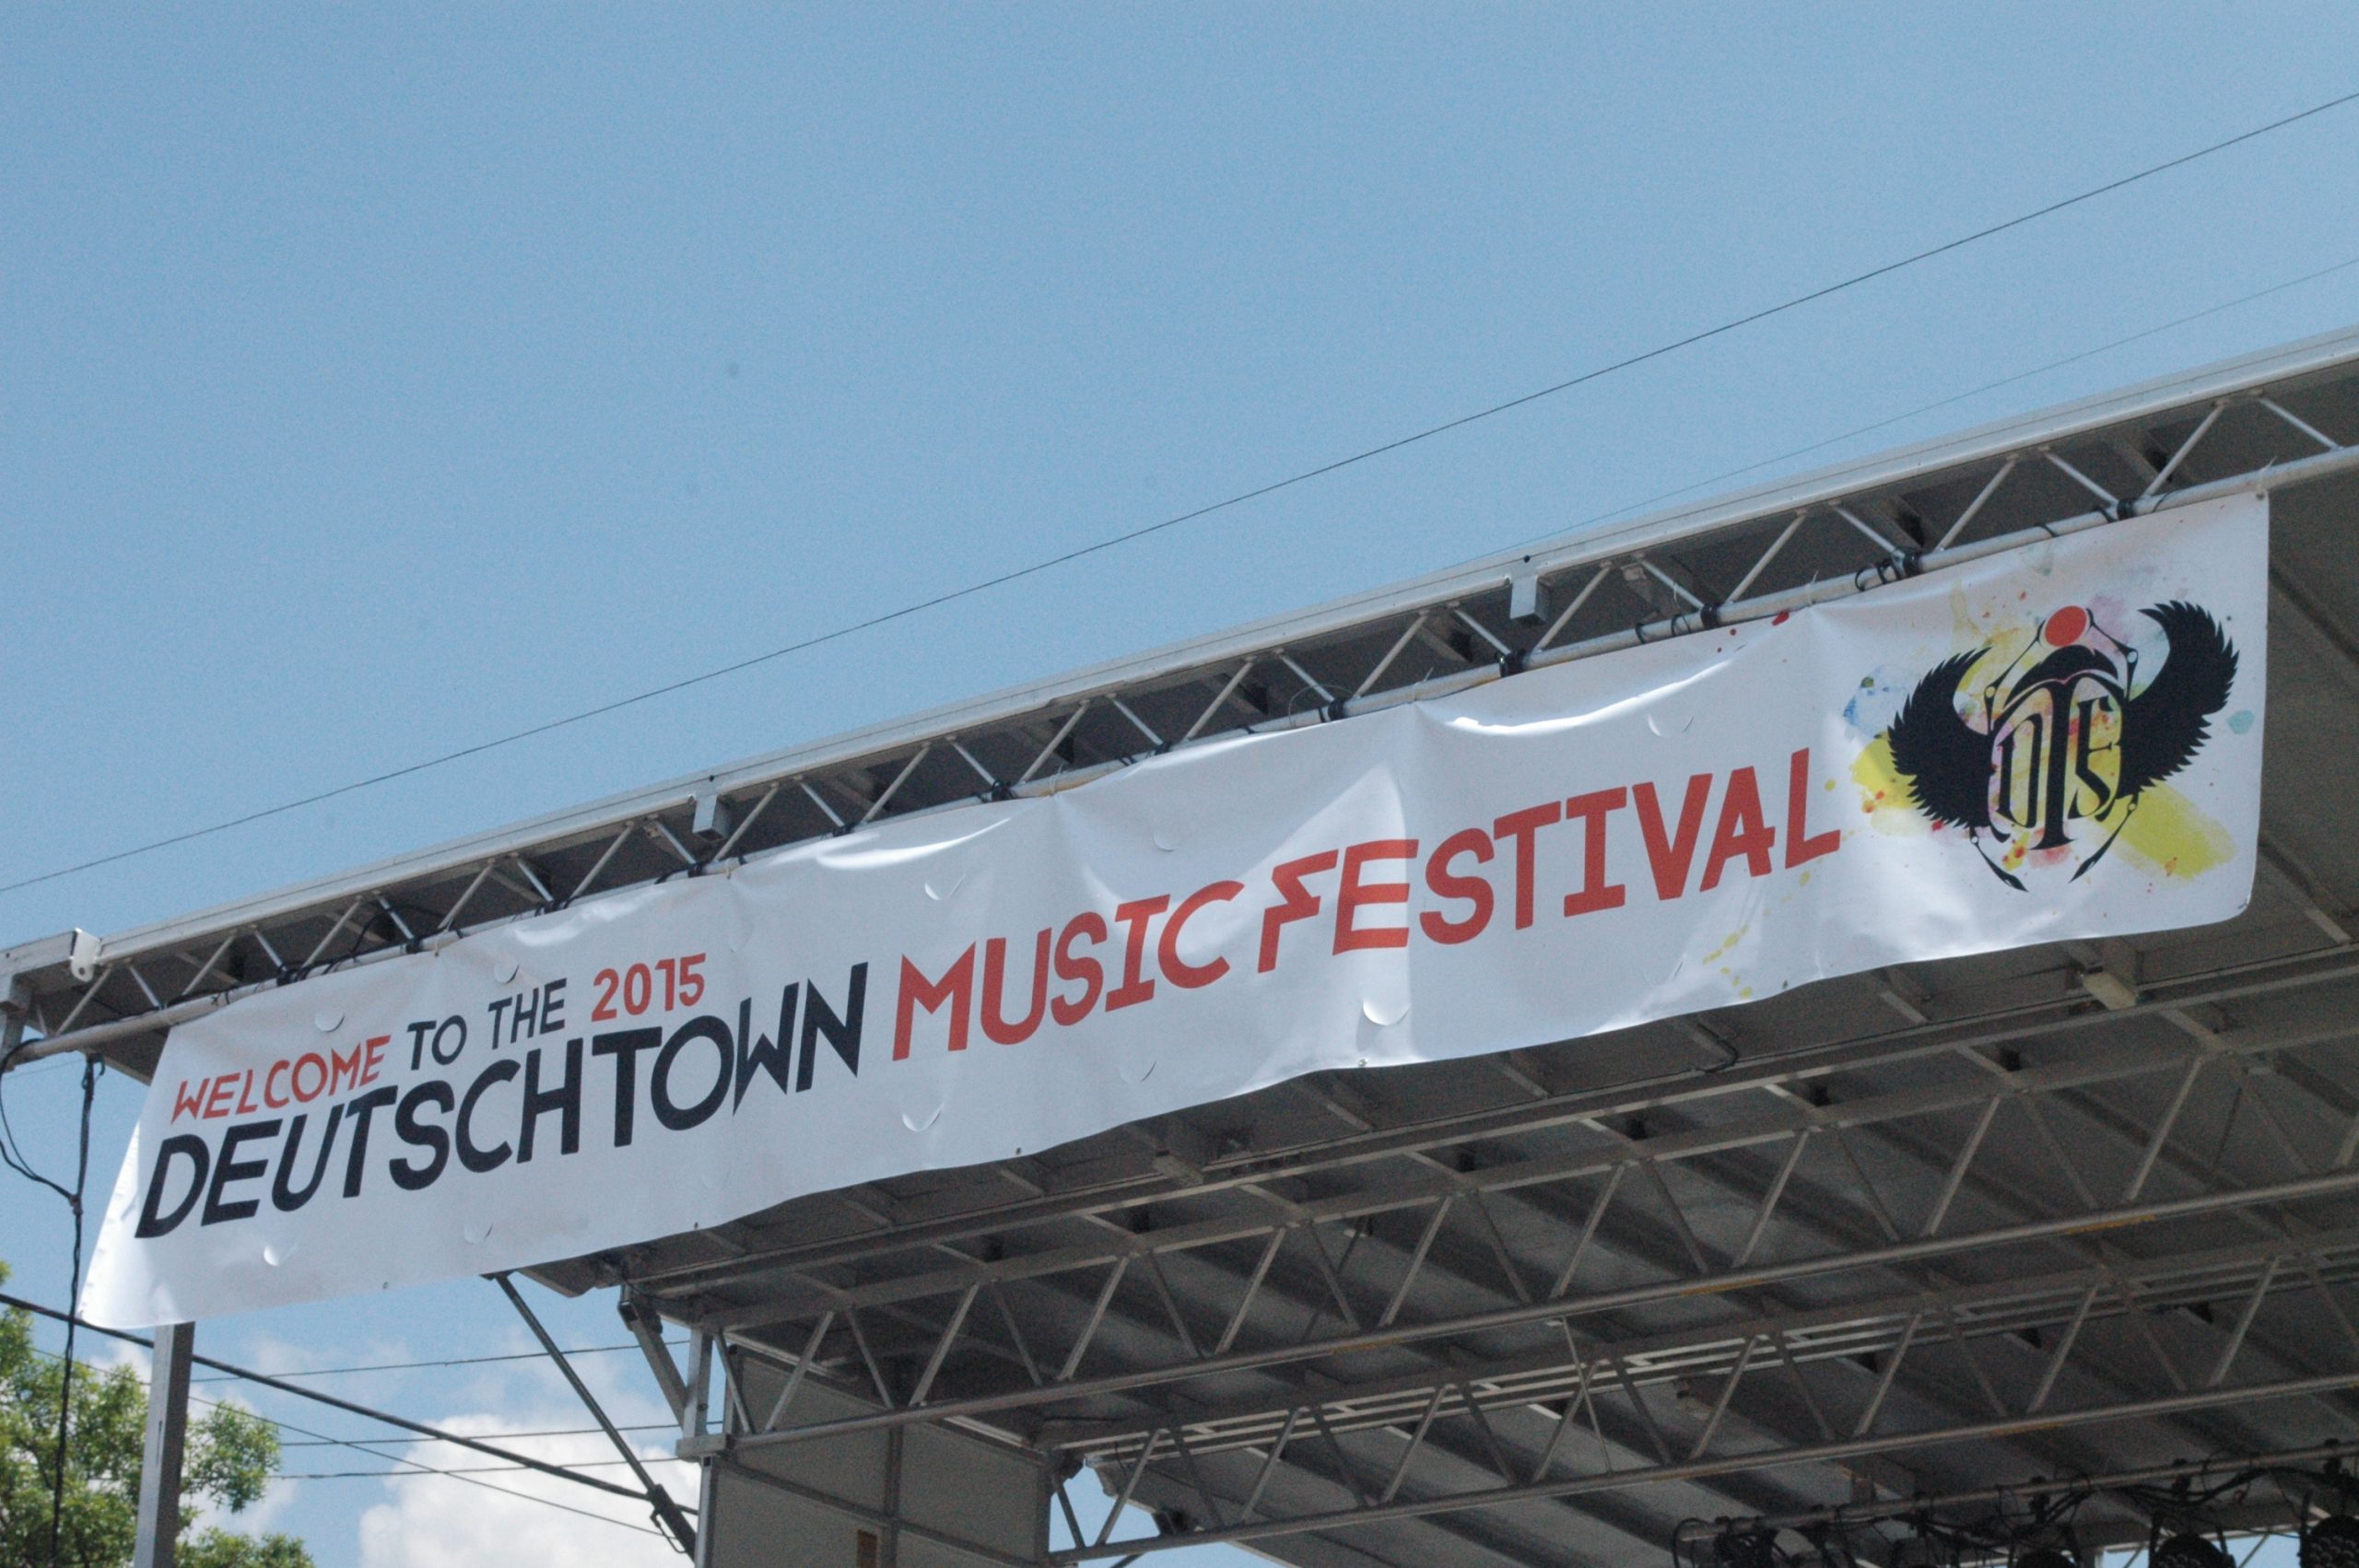 Deutschtown Music Festival celebrates another successful year